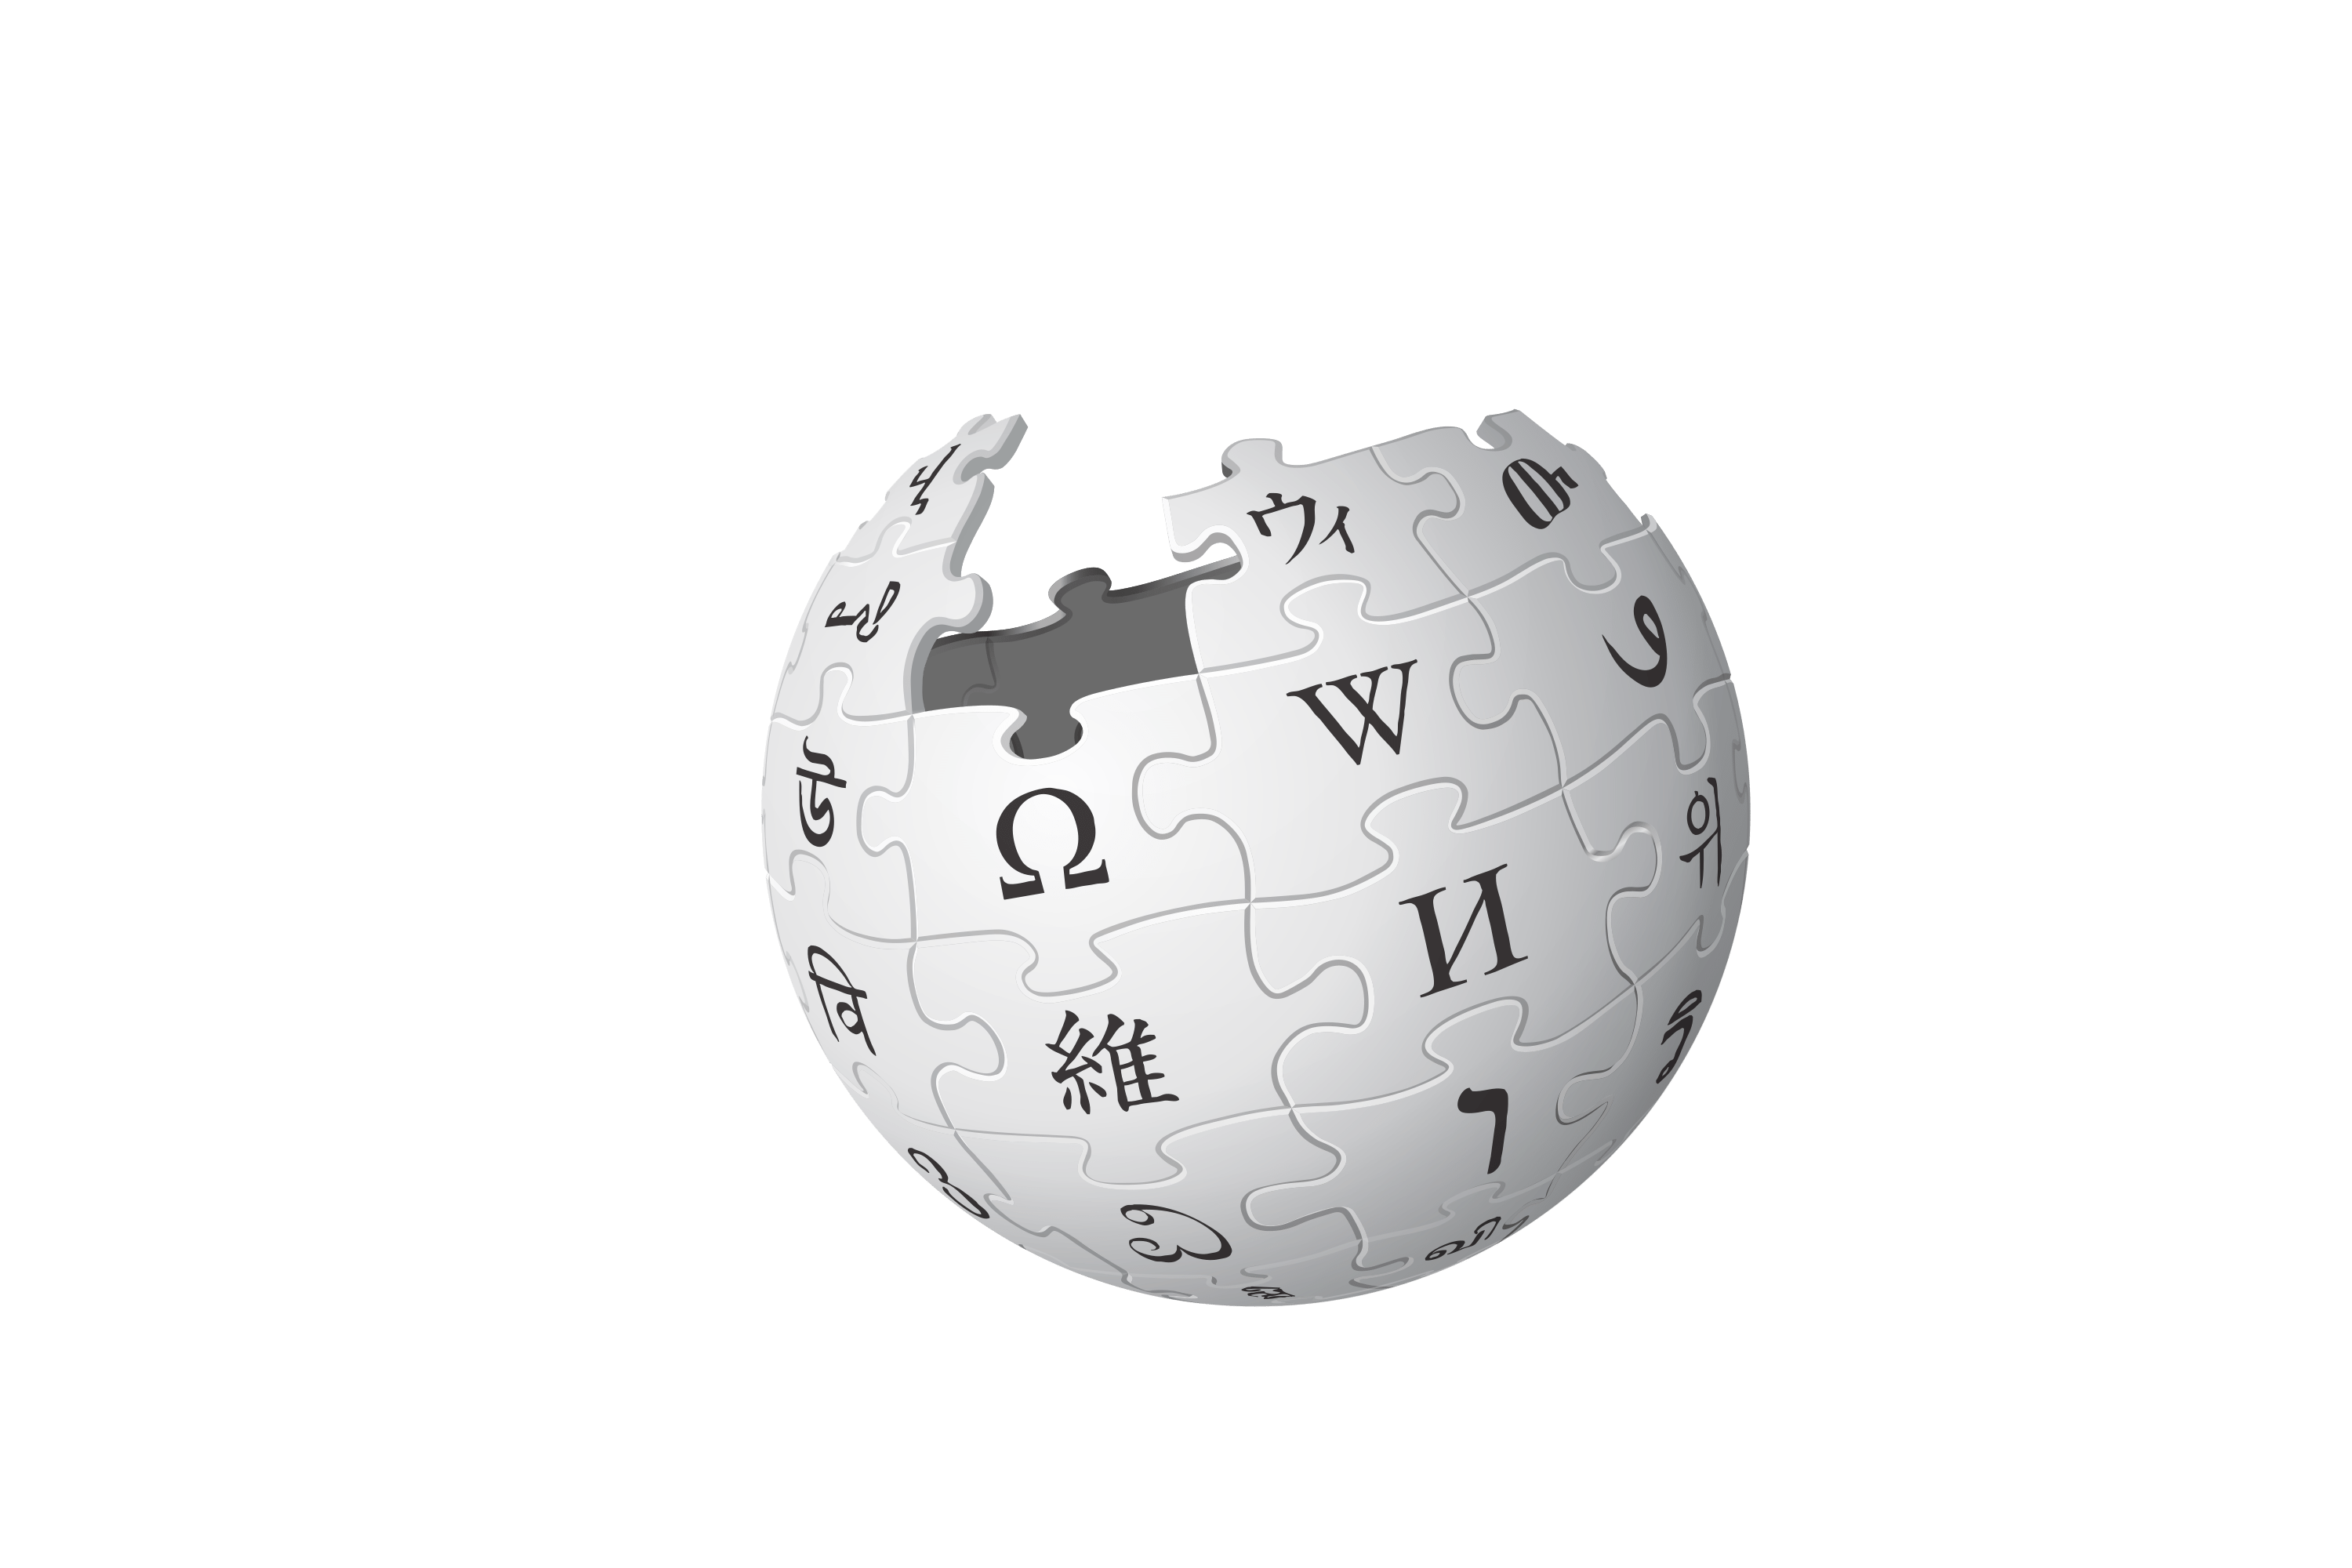 Https ru wikipedia org w index php. Википедия логотип. Значок Википедии. Логотип Википедии на прозрачном фоне. Википедия картинки.